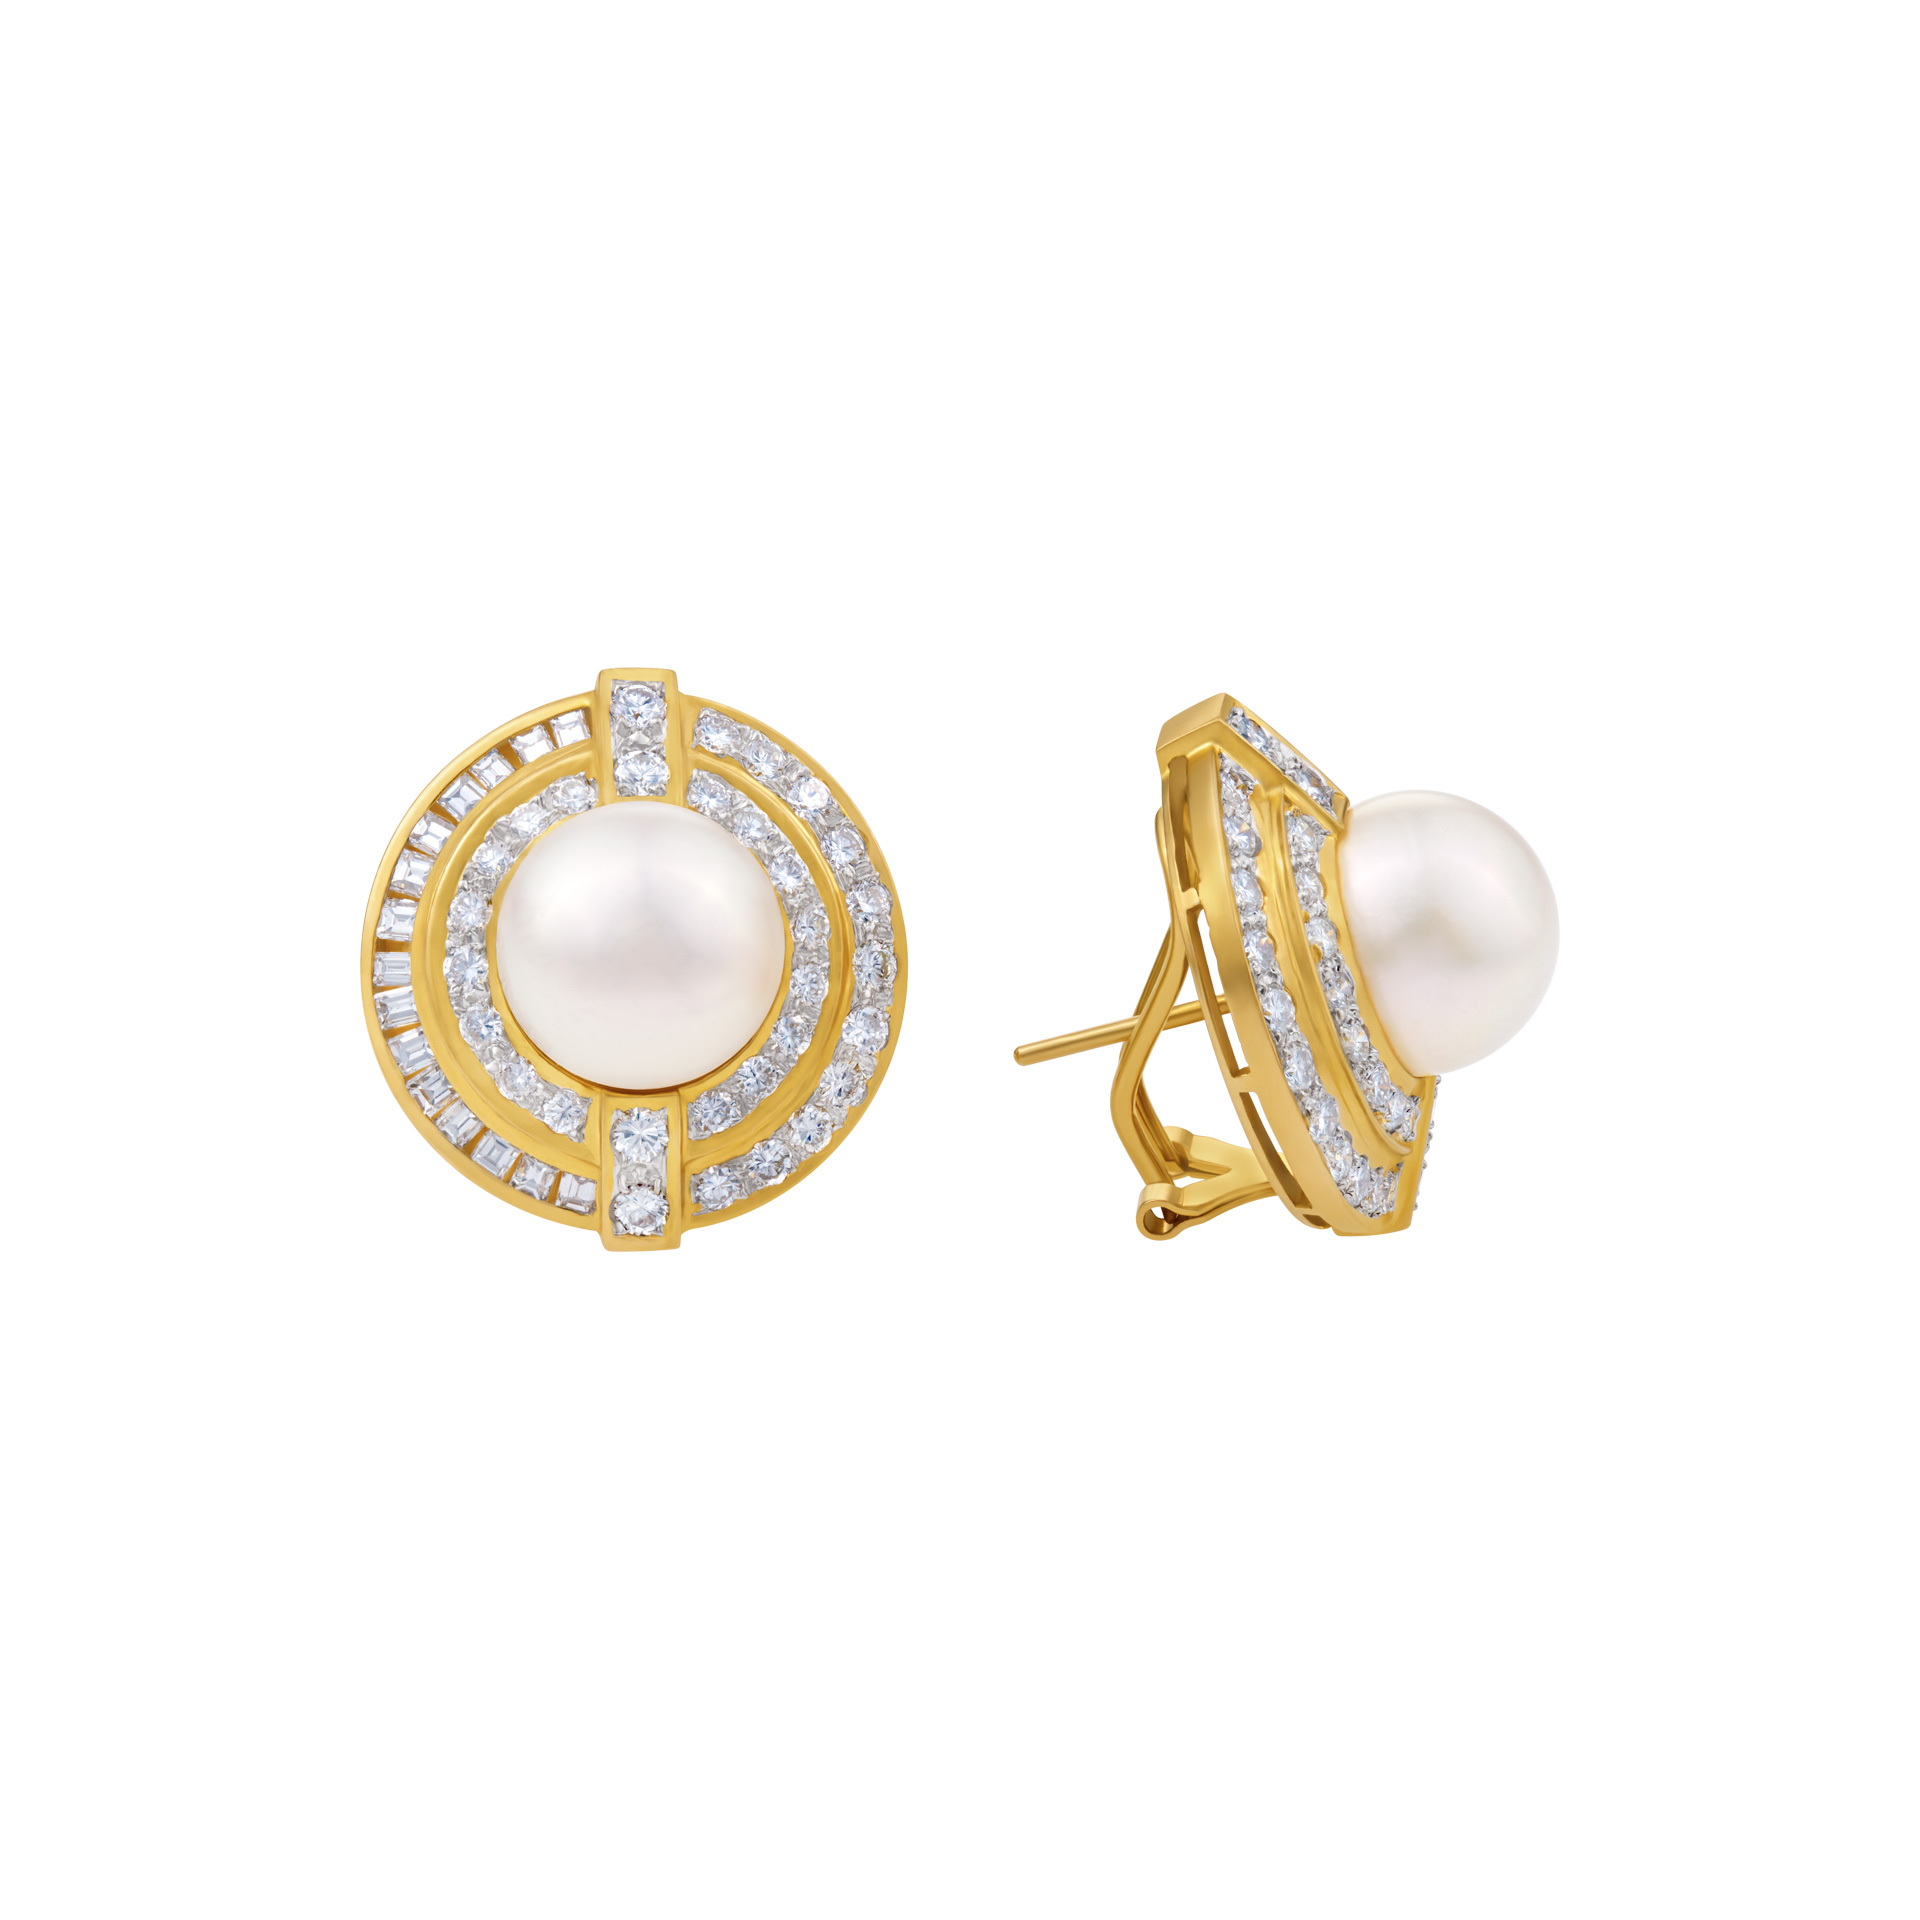 Pearl earrings with diamonds image 1